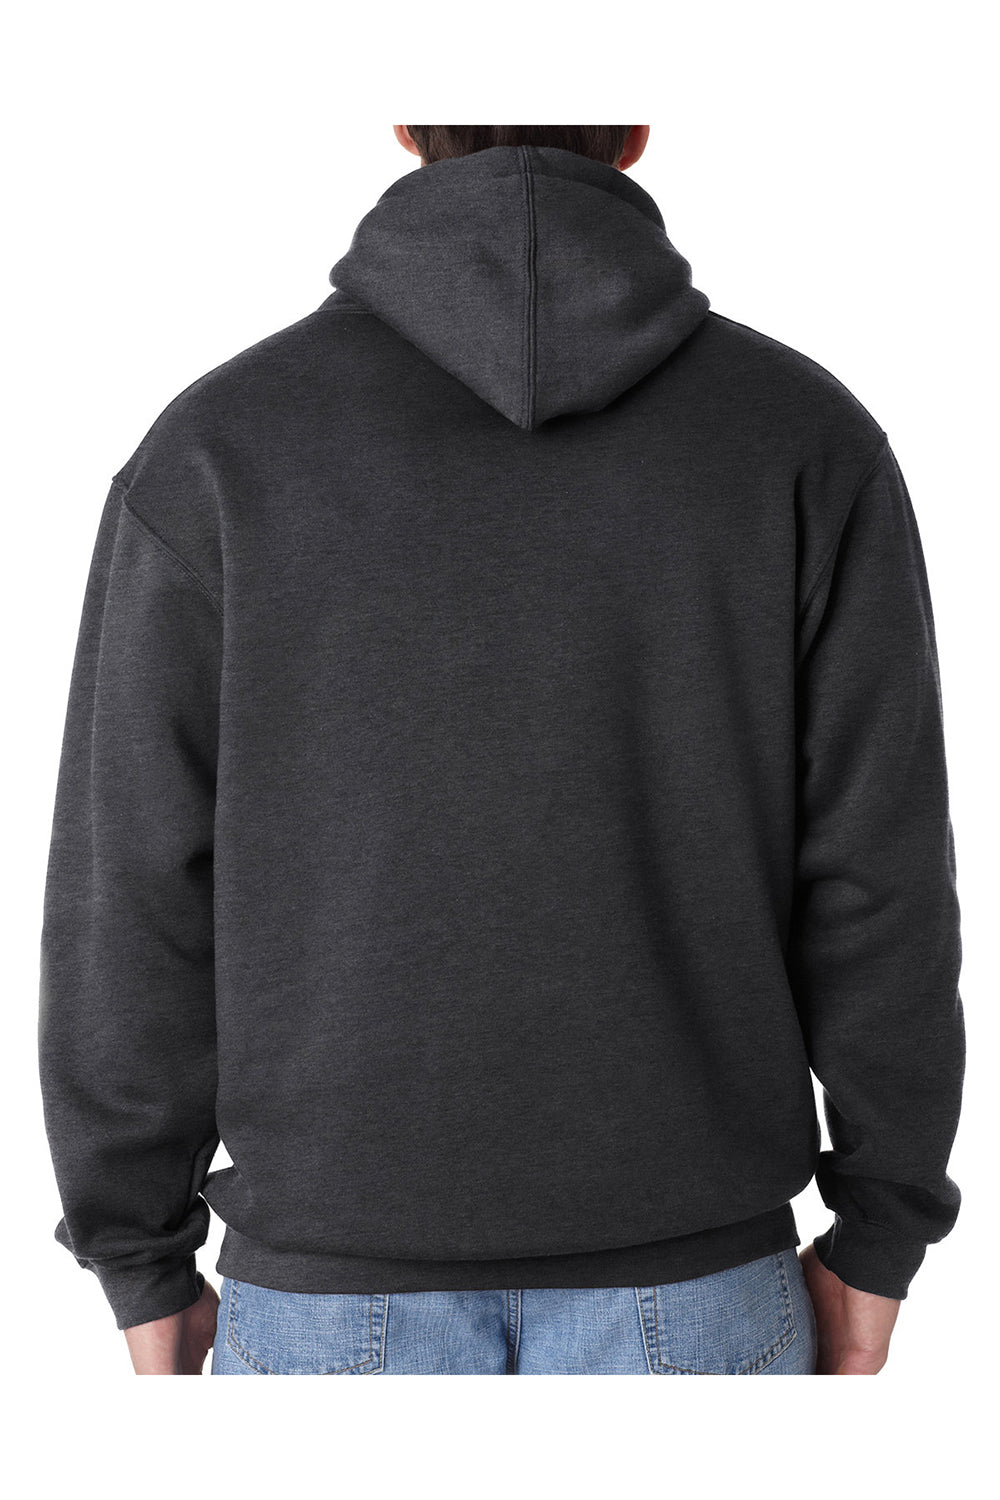 Bayside BA960 Mens USA Made Hooded Sweatshirt Hoodie Heather Charcoal Grey Model Back